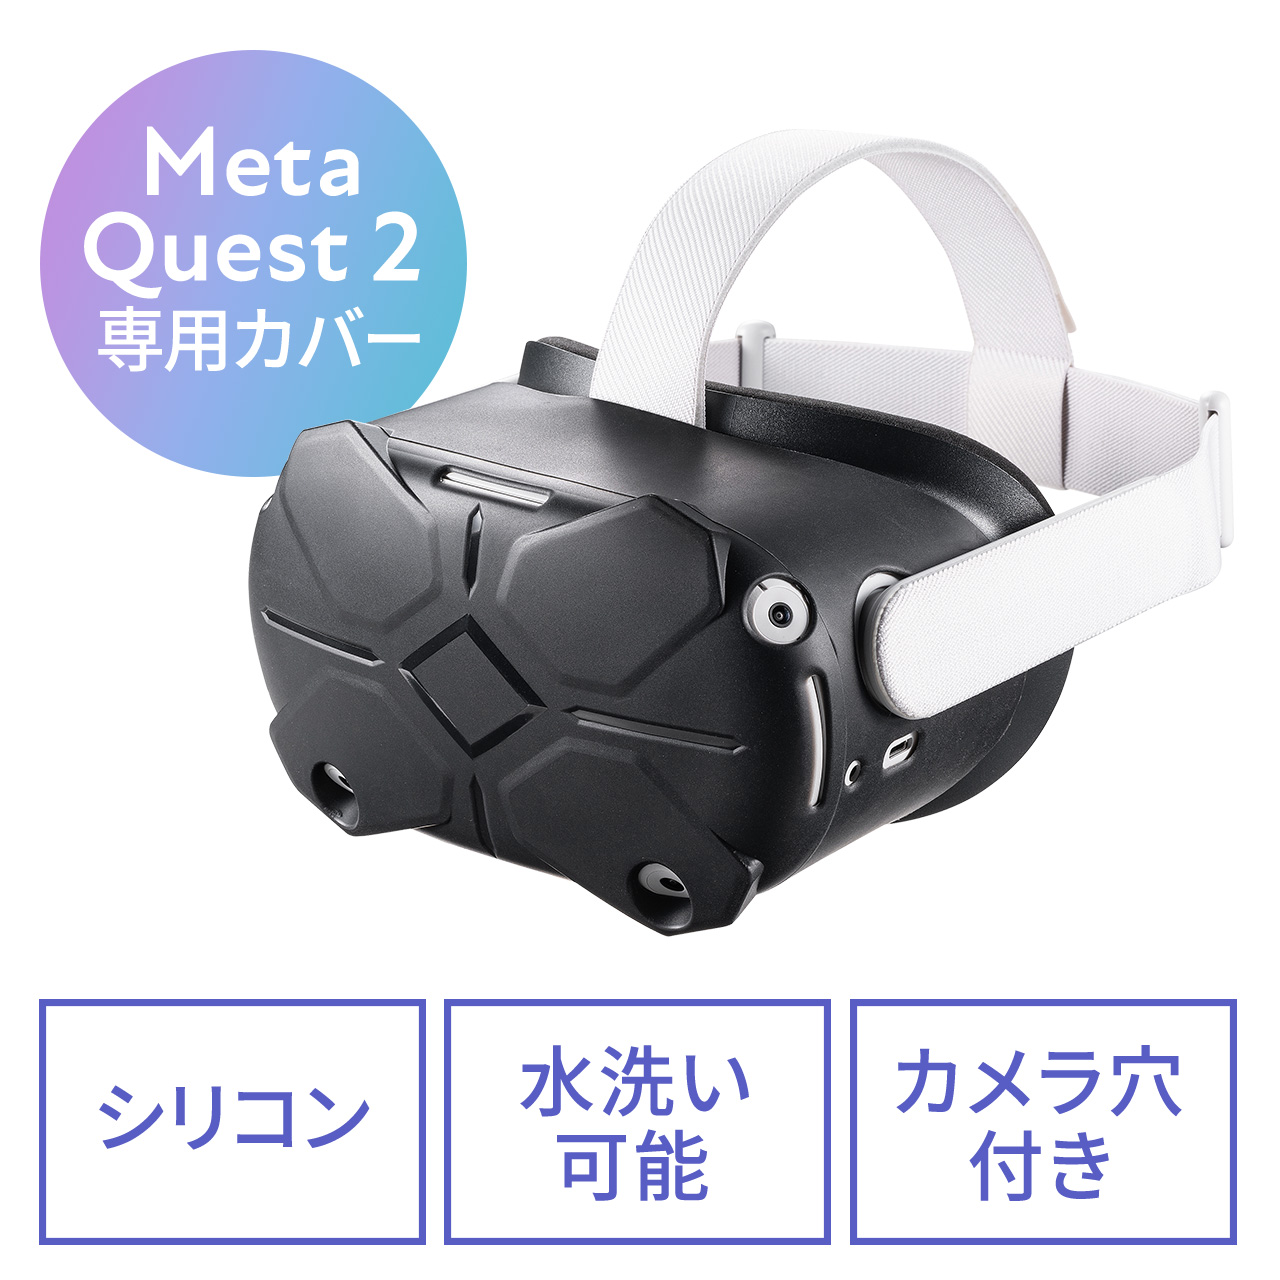 yAt^[Z[zMeta Quest 2 Oculus Quest 2 pVFJo[ VR ȒPVFJo[ VR ȒP 400-MEDIQ2C001